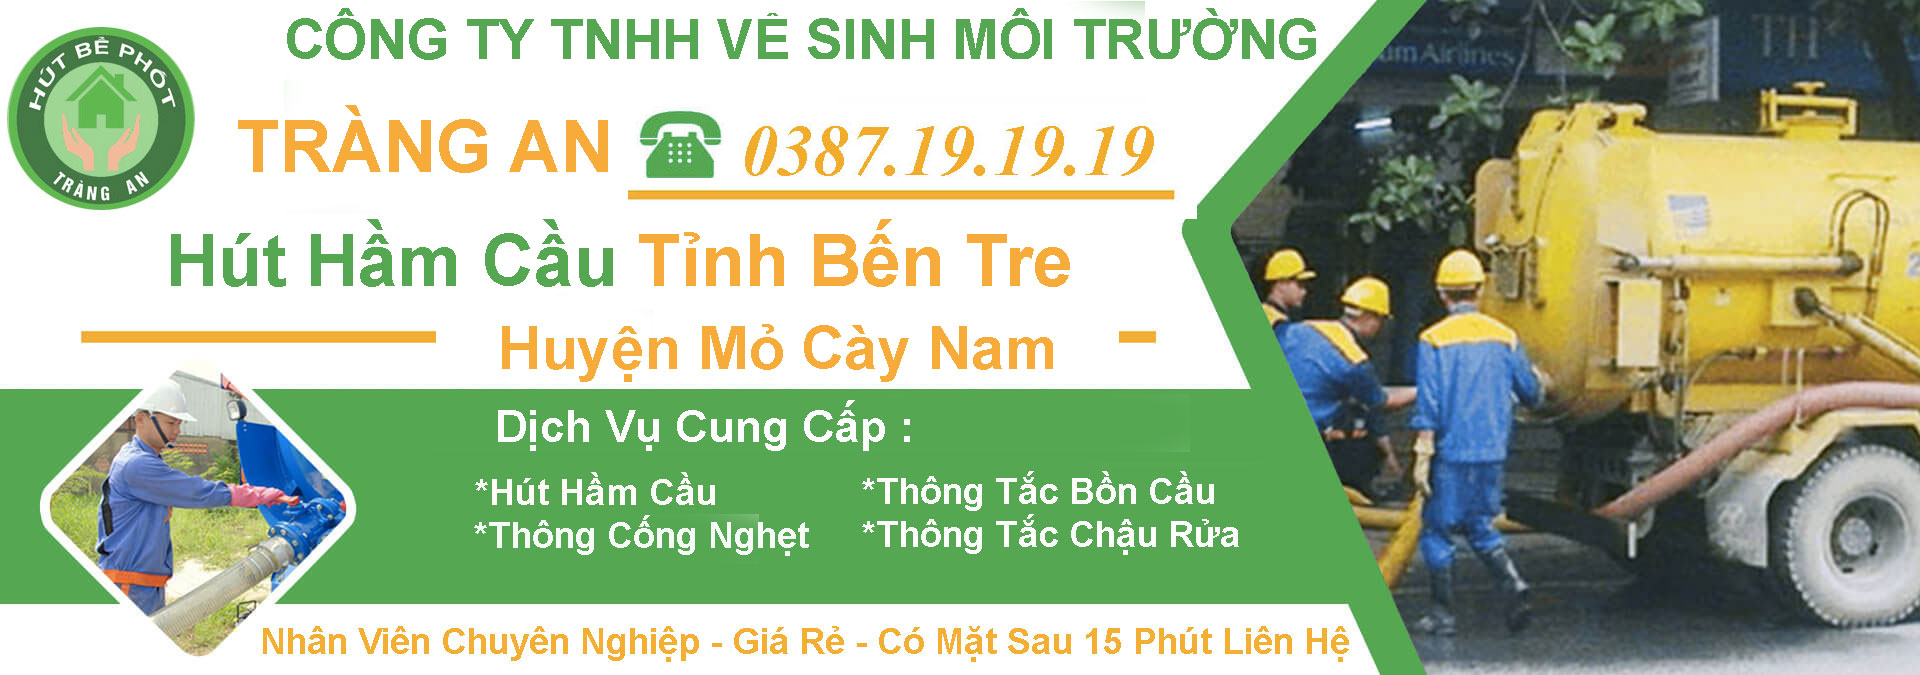 Hut Ham Cau Tinh Ben Tre Huyen Mo Cay Nam